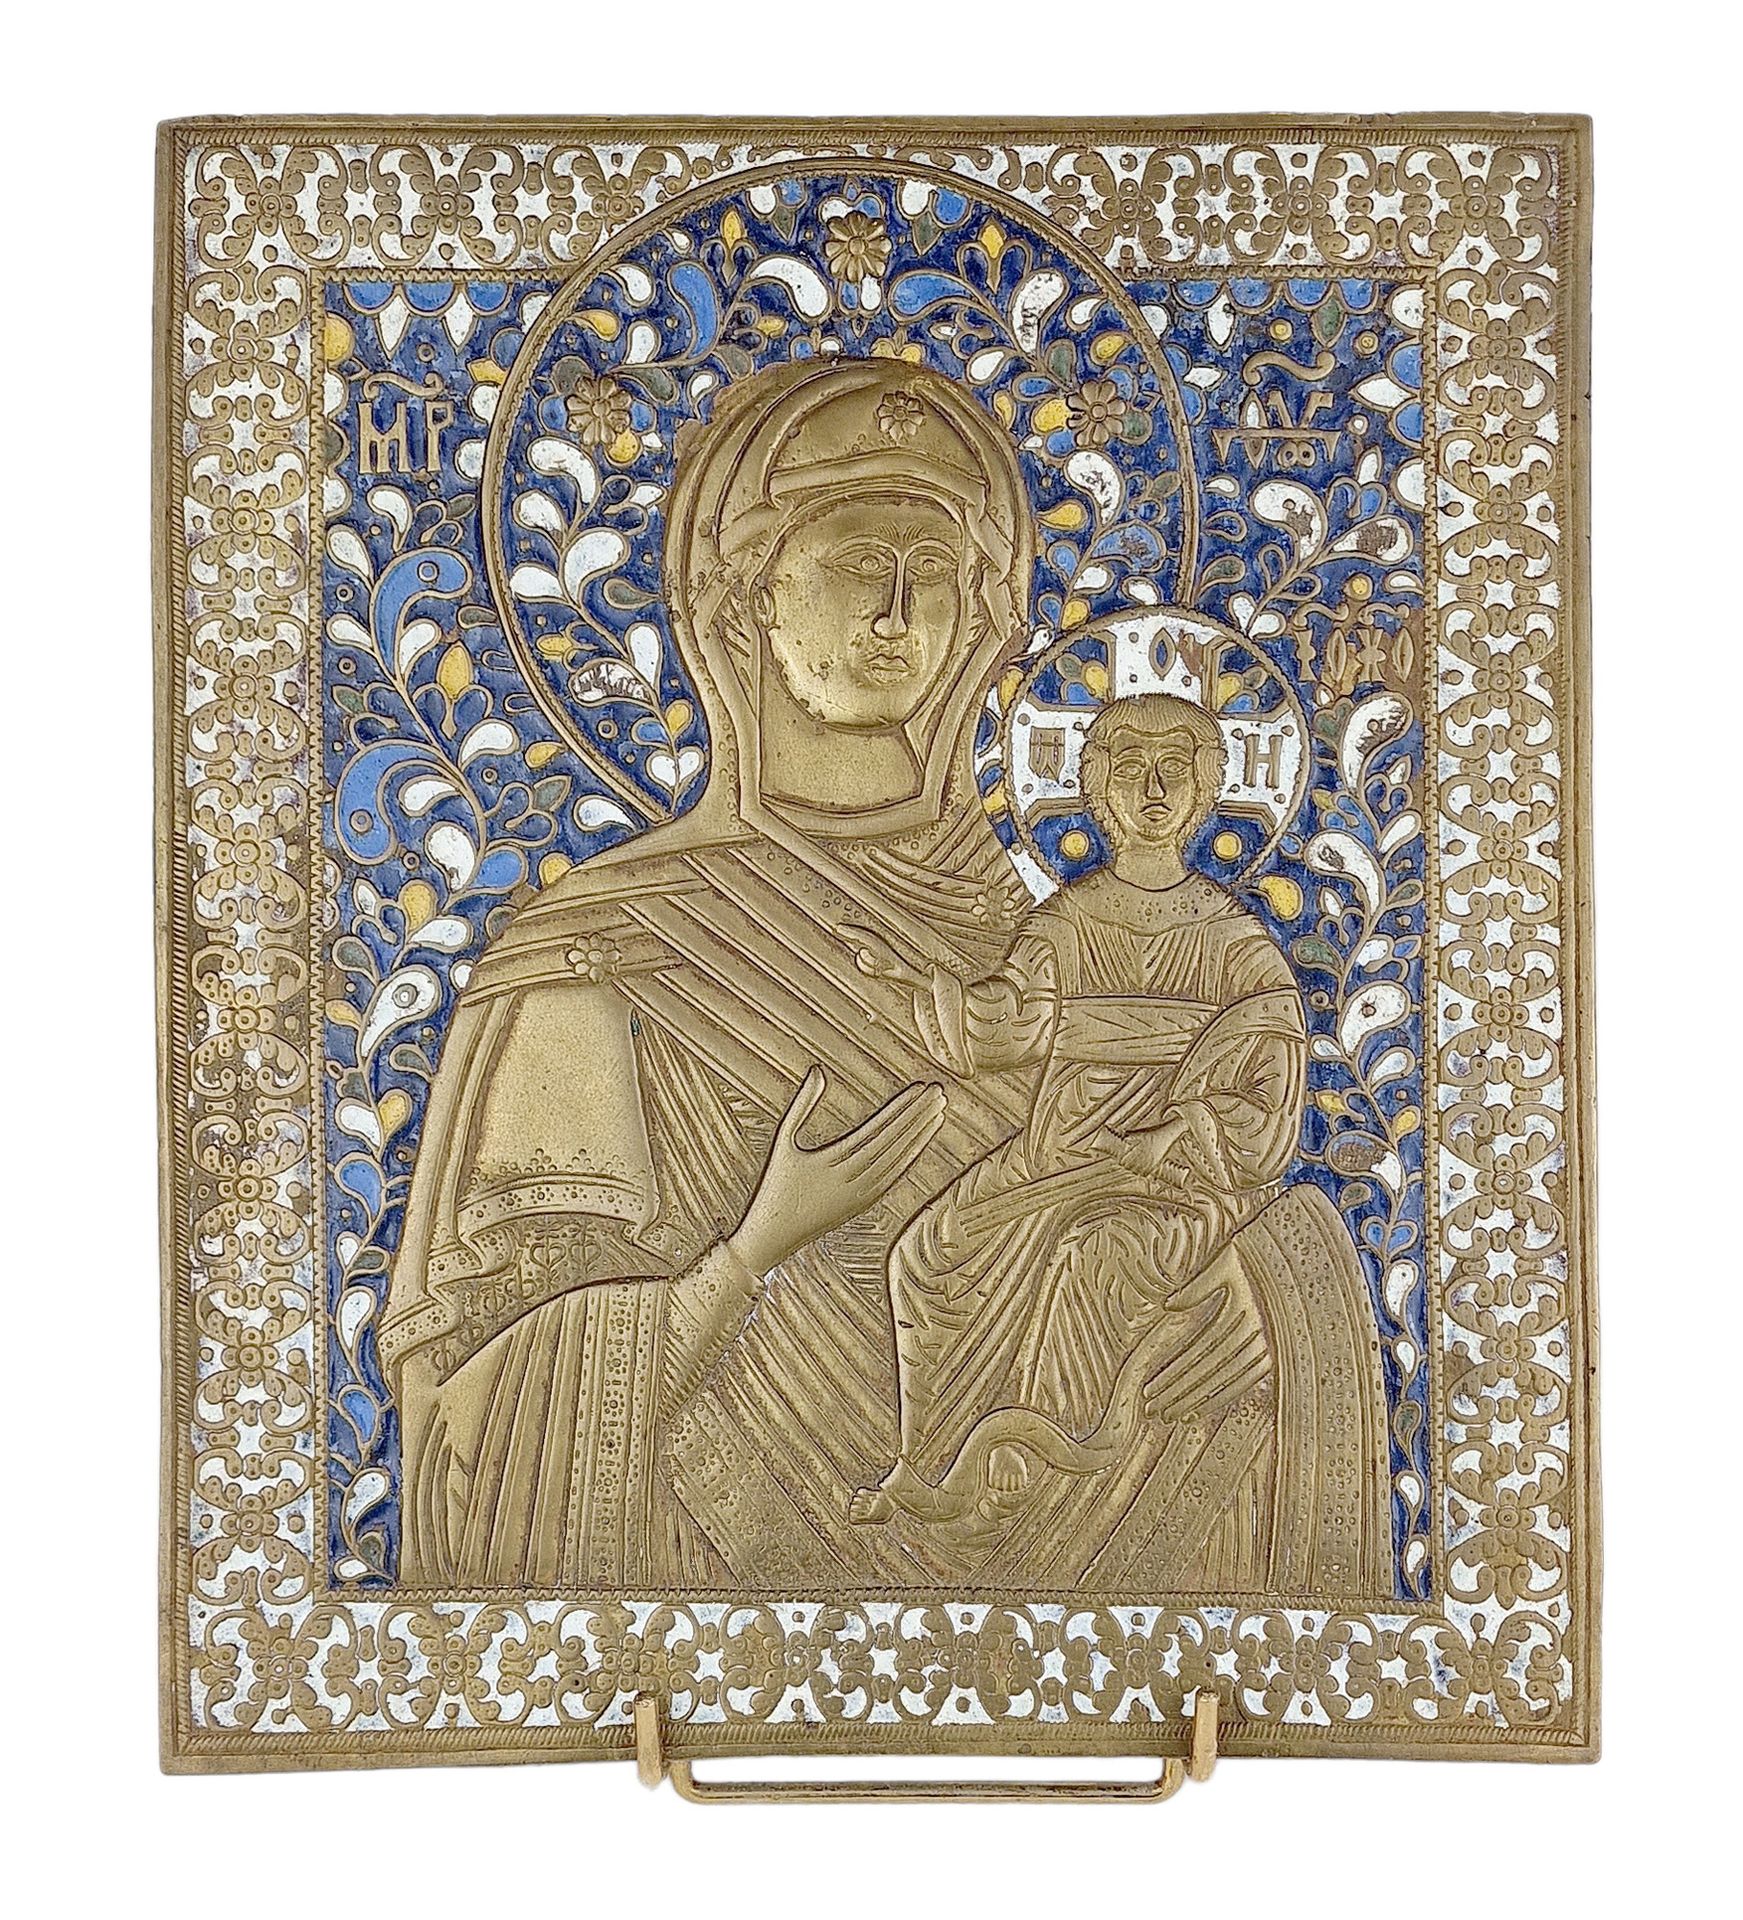 RUSSIE, 20ème SIECLE 盘子上的图标



铜制，有珐琅彩装饰，表现了一个被称为耶路撒冷圣母的圣母和儿童。

尺寸：27.5 x 24.5厘米&hellip;